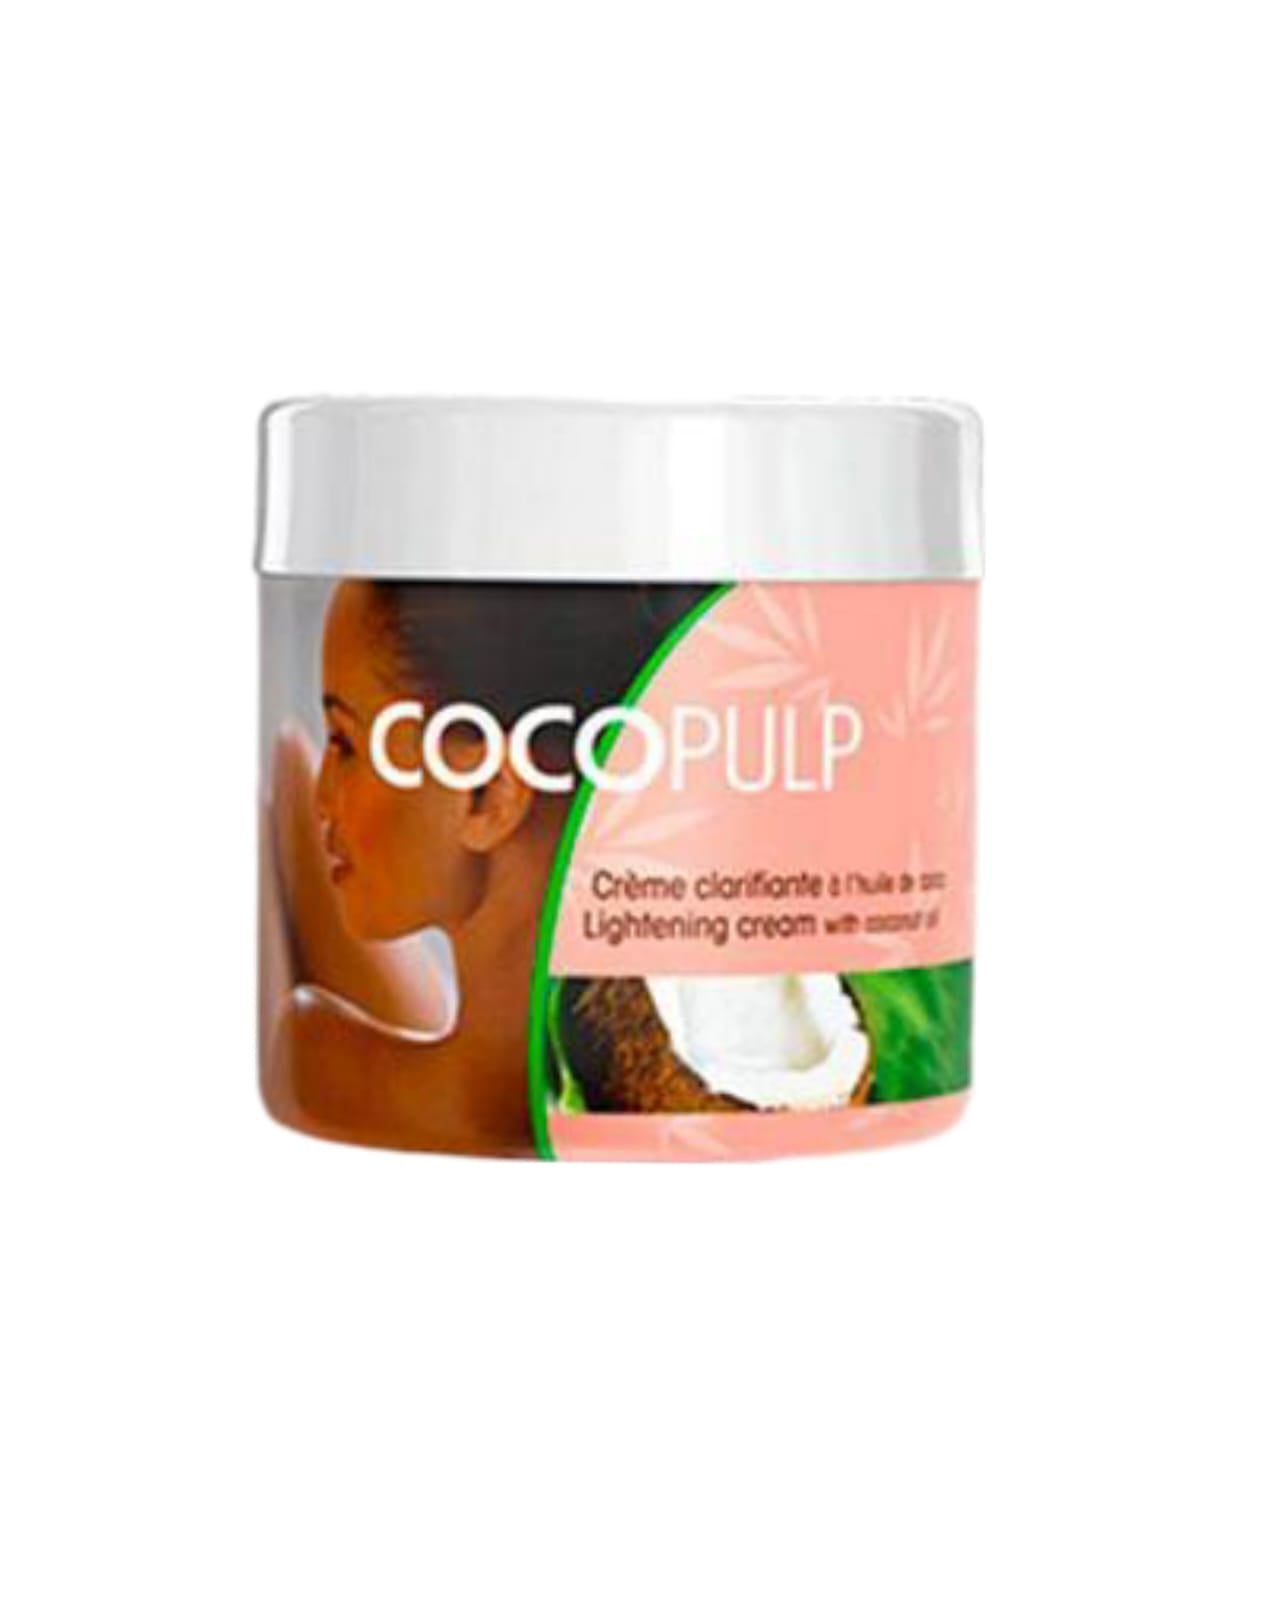 Cocopulp Lightening Cream With Coconut Oil